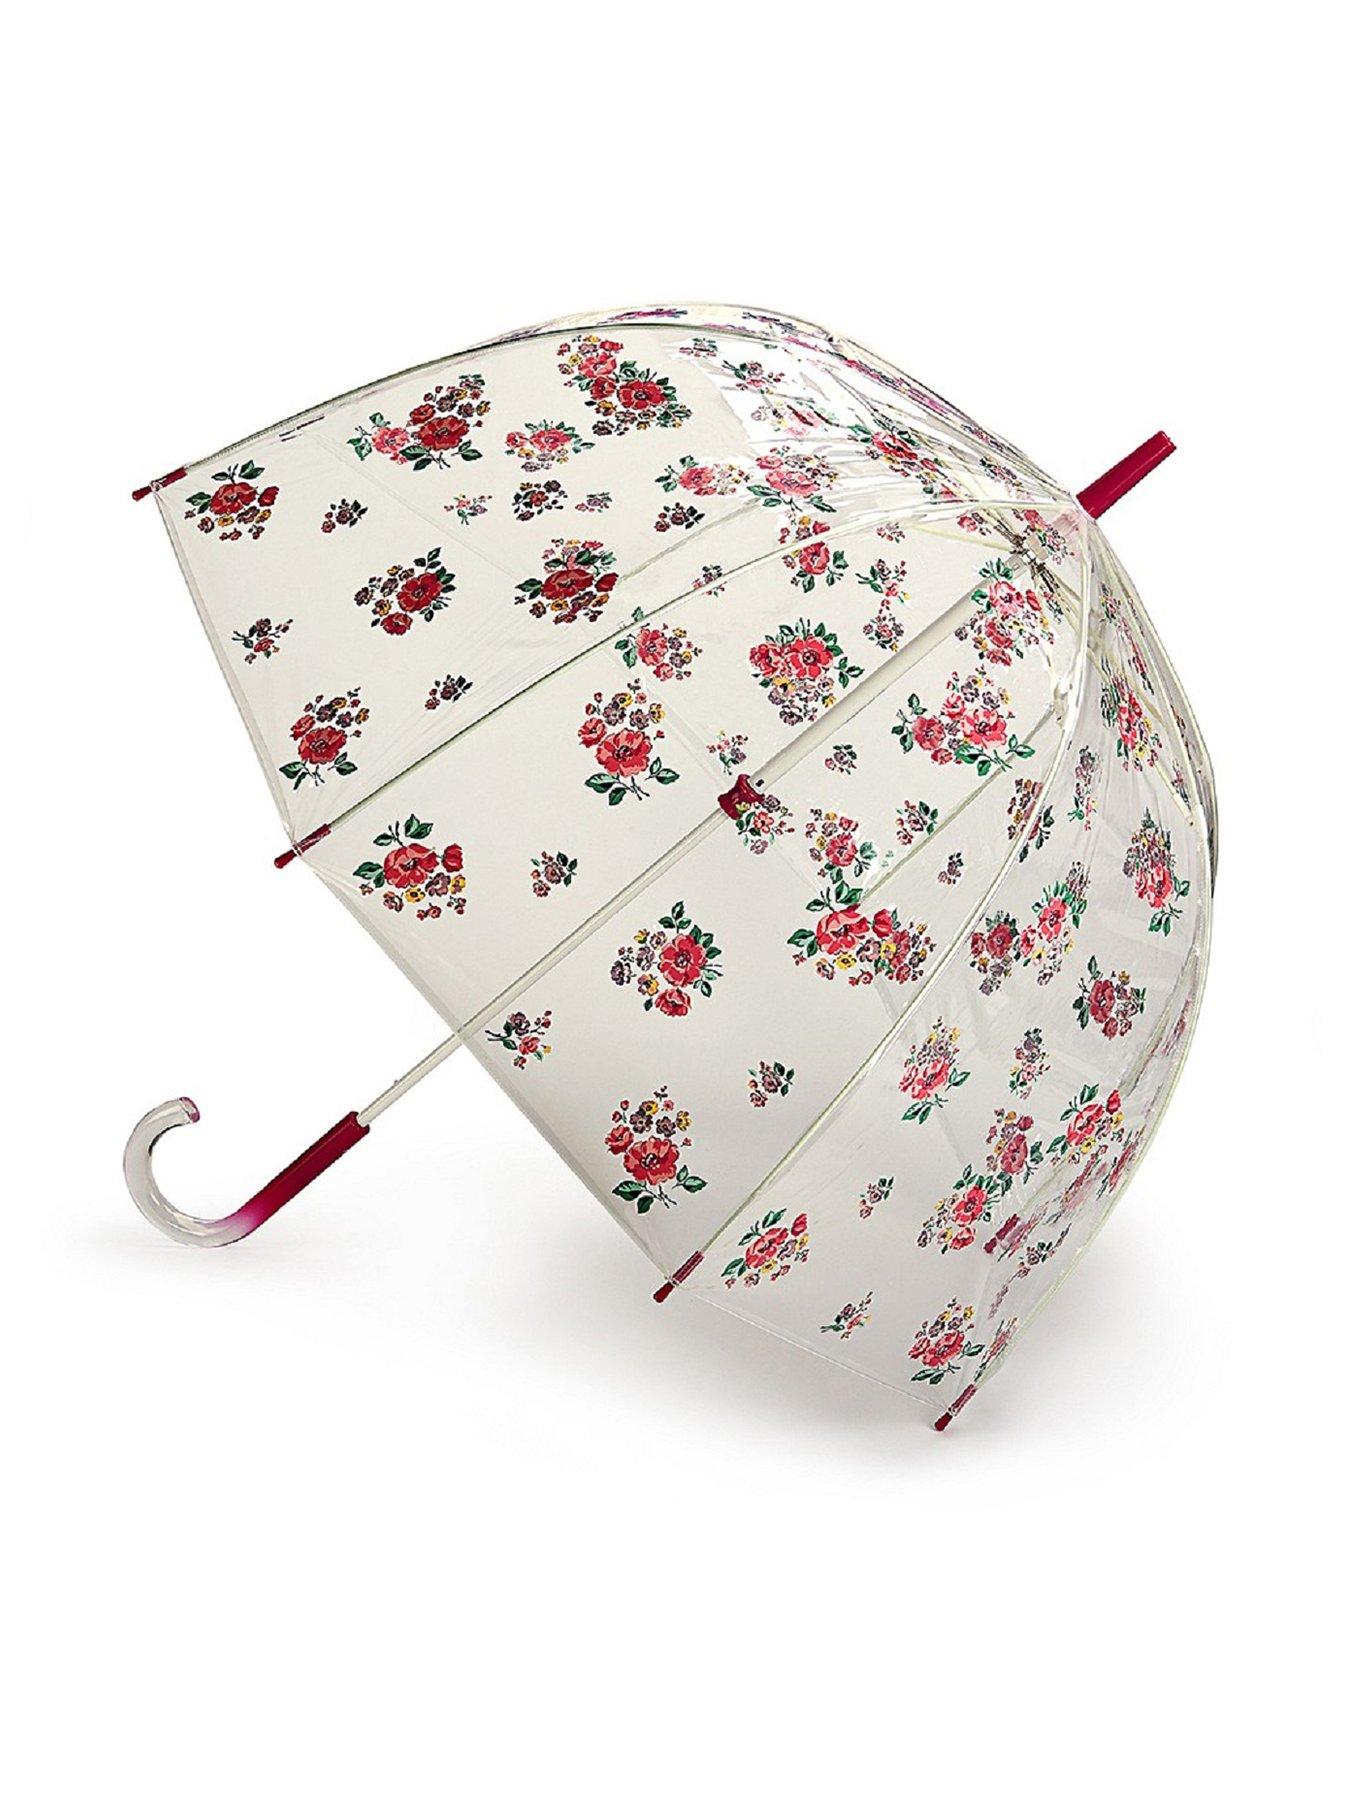 cath kidston disney umbrella